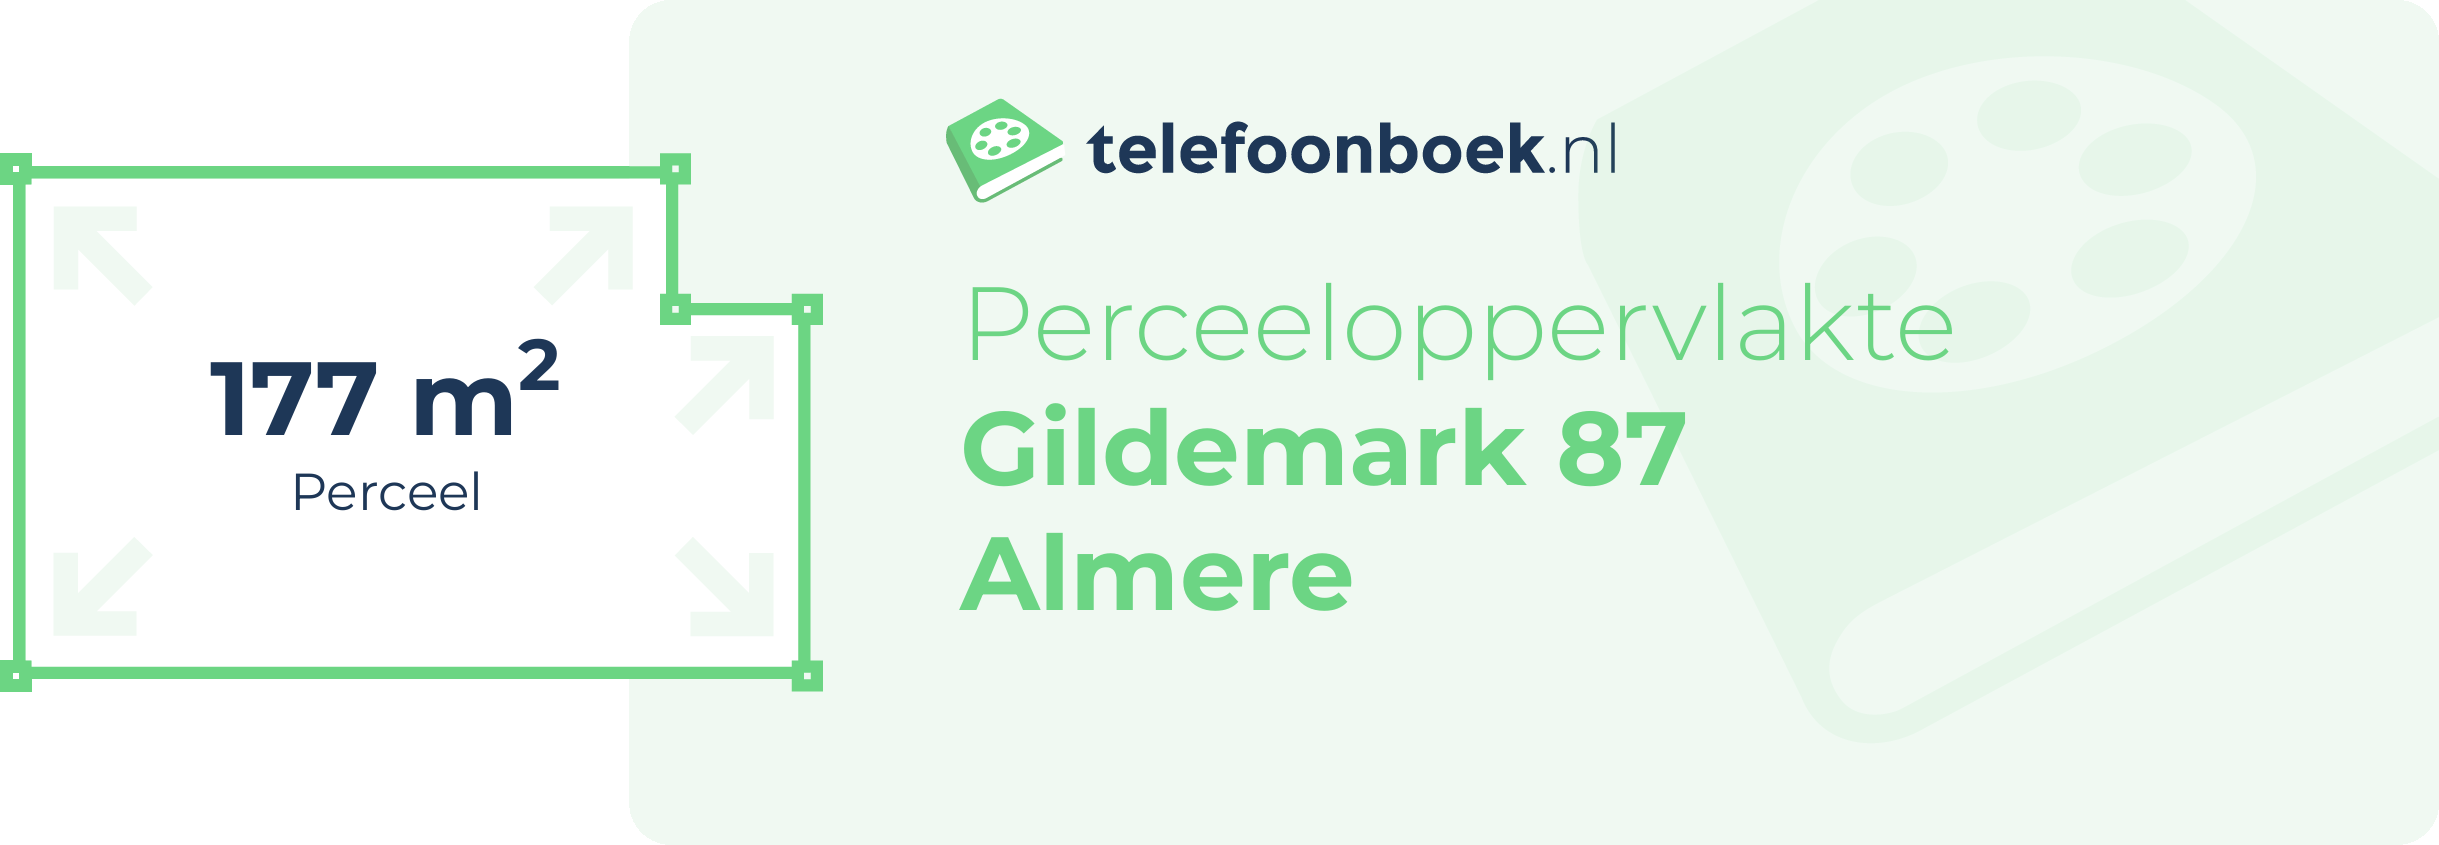 Perceeloppervlakte Gildemark 87 Almere